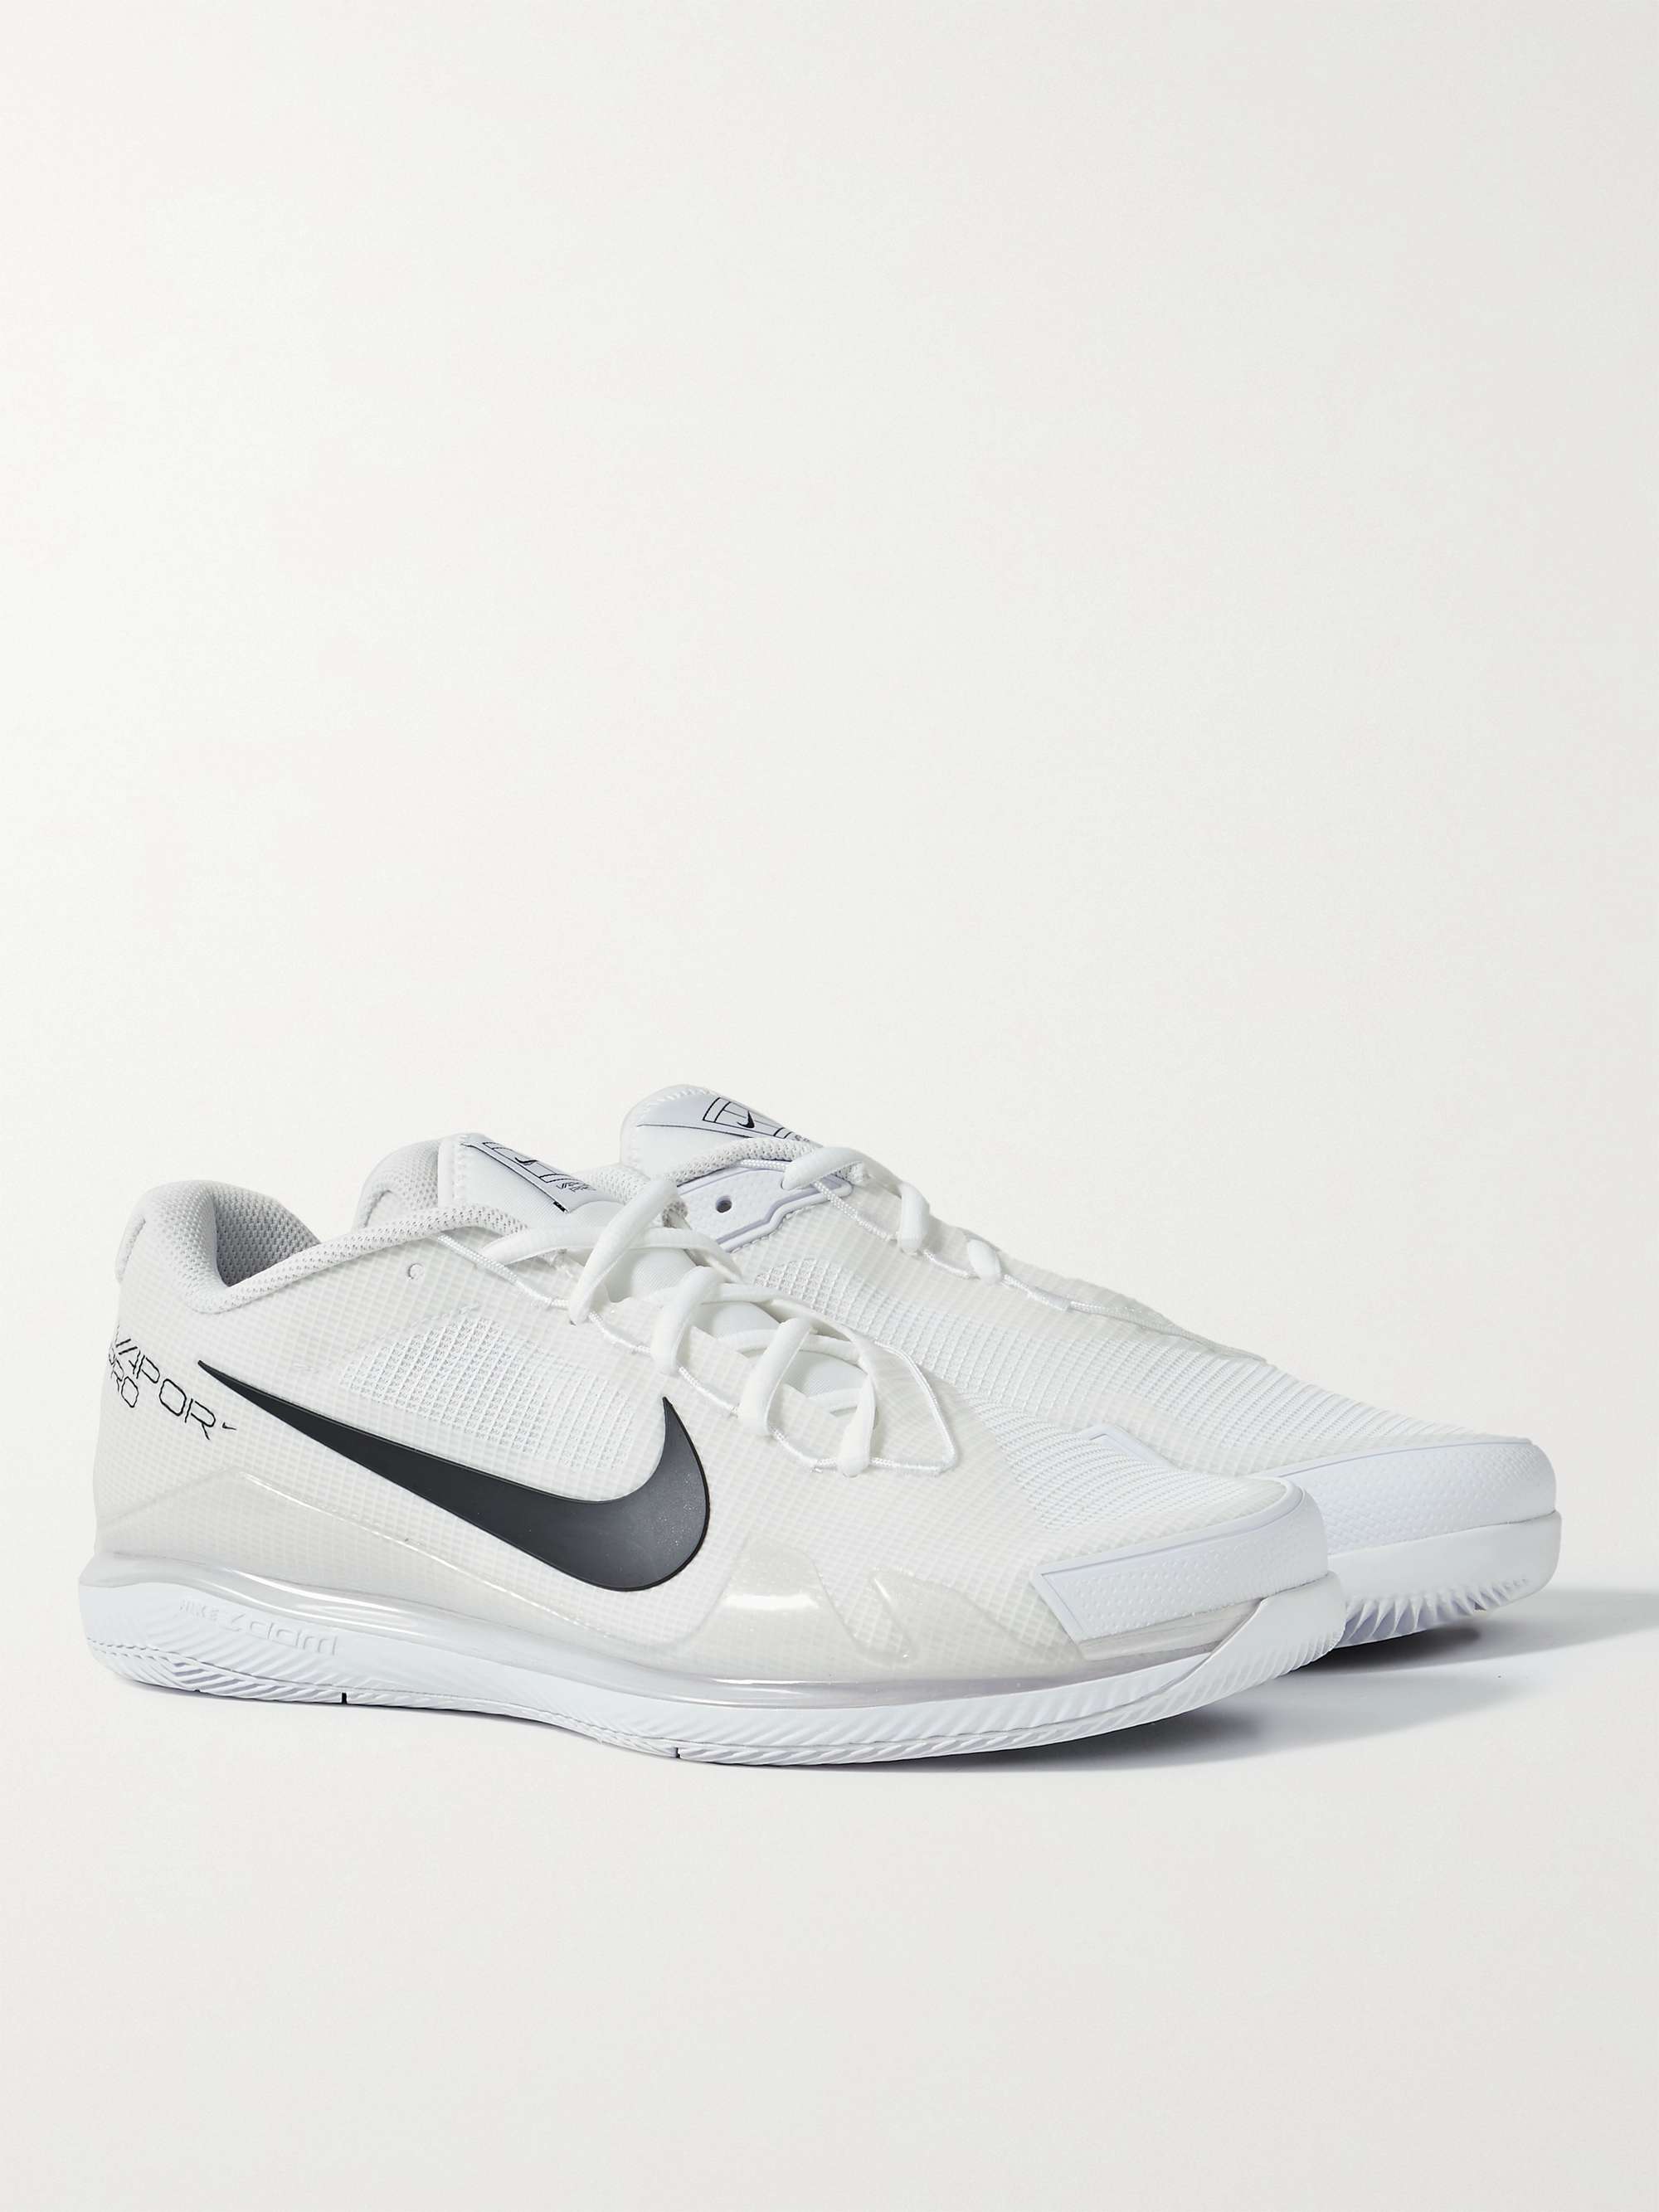 NIKE TENNIS NikeCourt Air Zoom Vapor Pro Rubber-Trimmed Mesh Tennis Sneakers